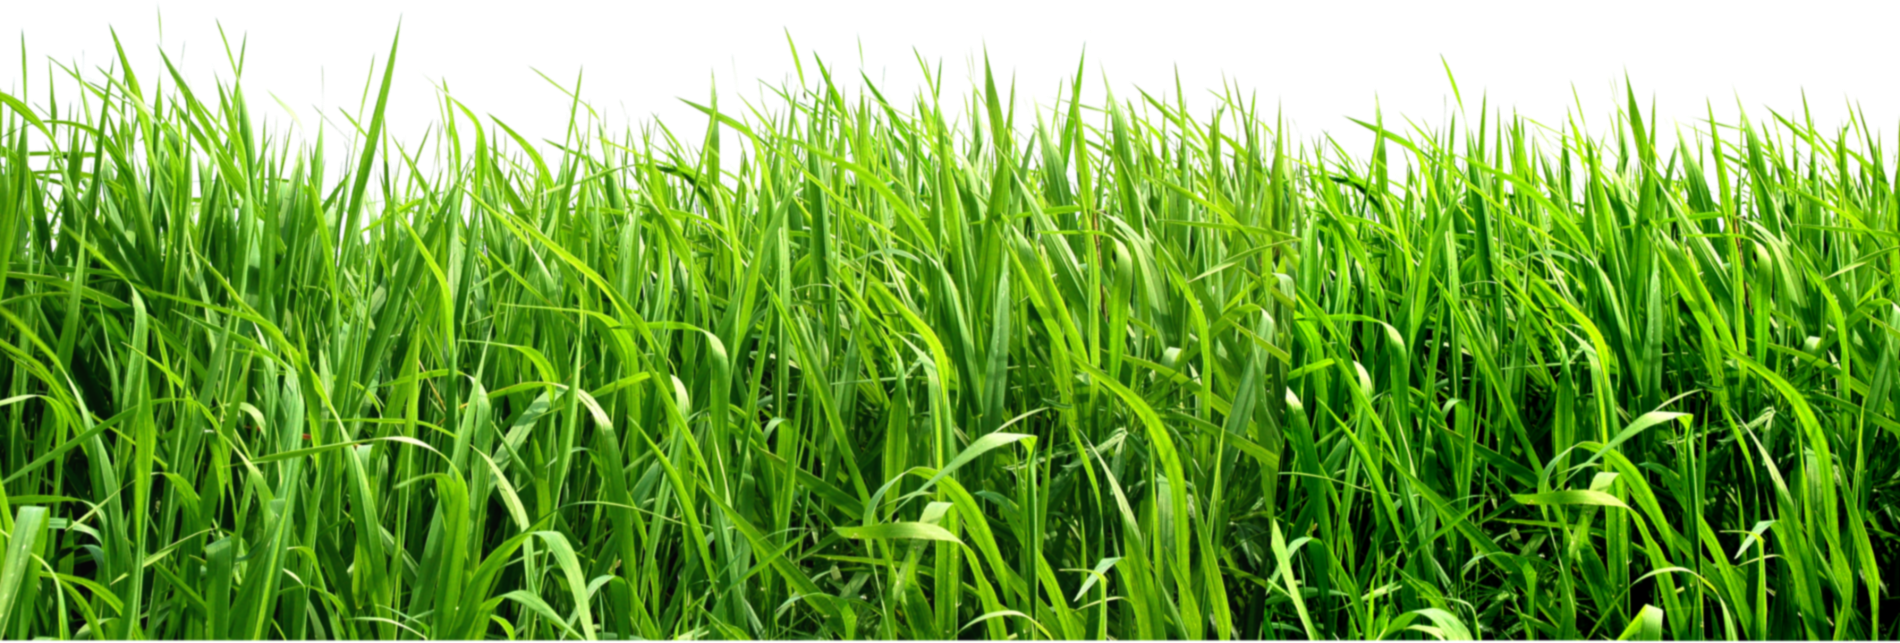 Grass transparent download. Field clipart outdoor background